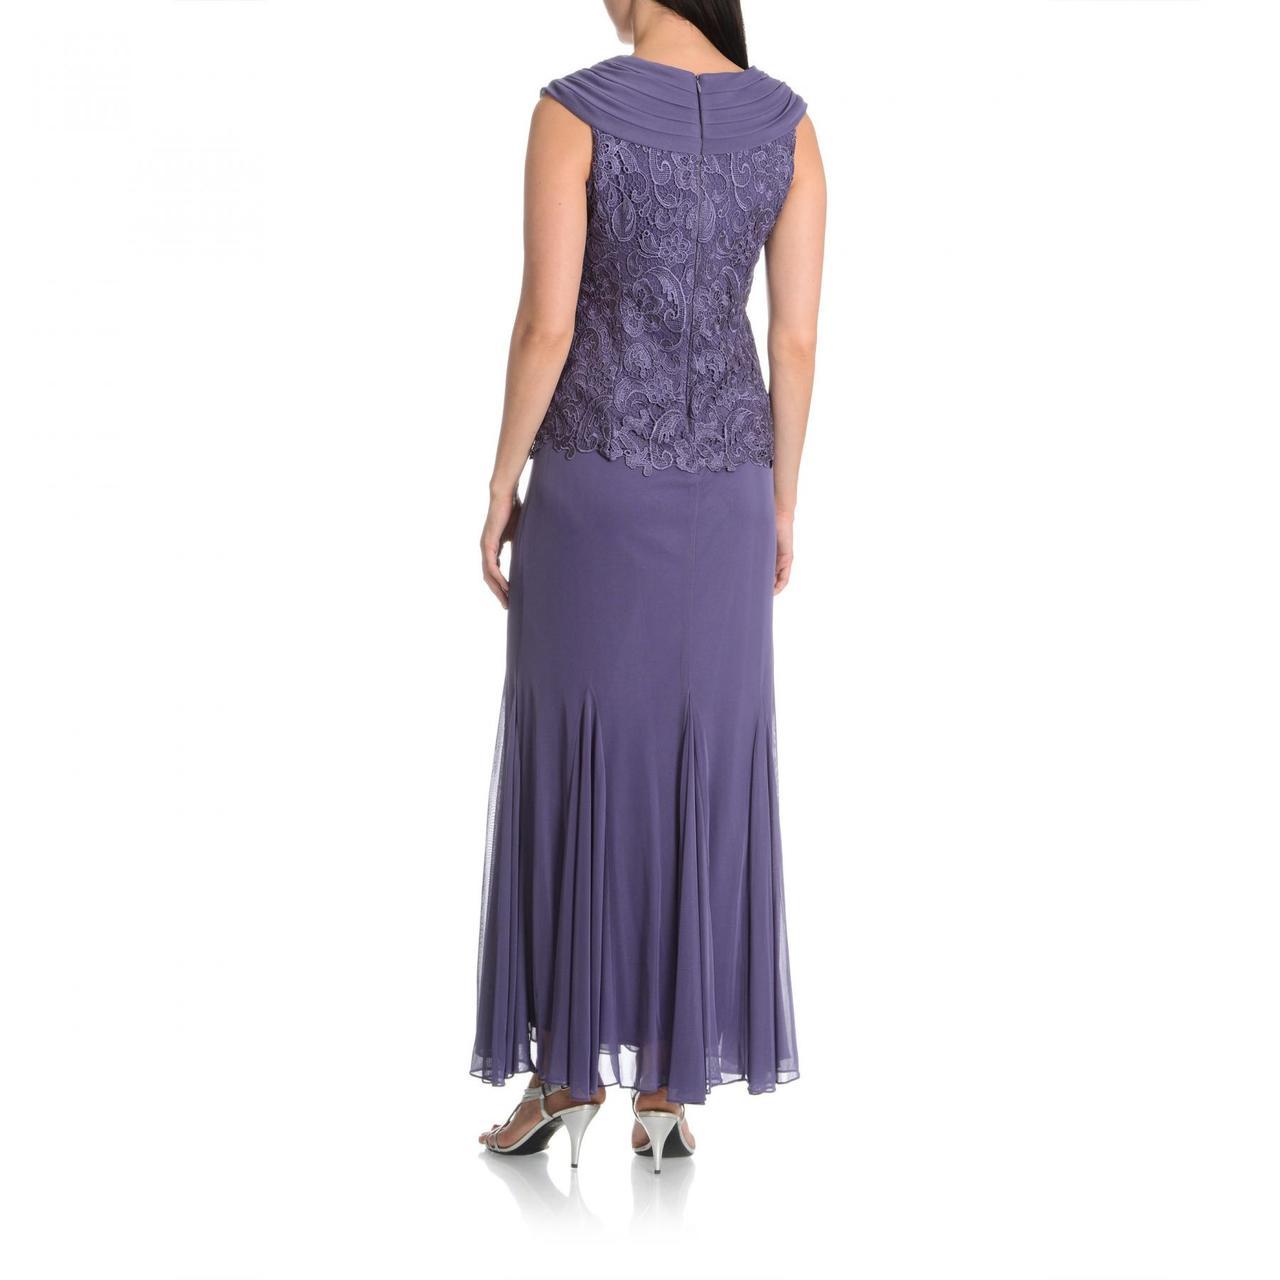 Patra - Lace Embellished V-Neck Jersey Sheath Dress 12678 in Purple